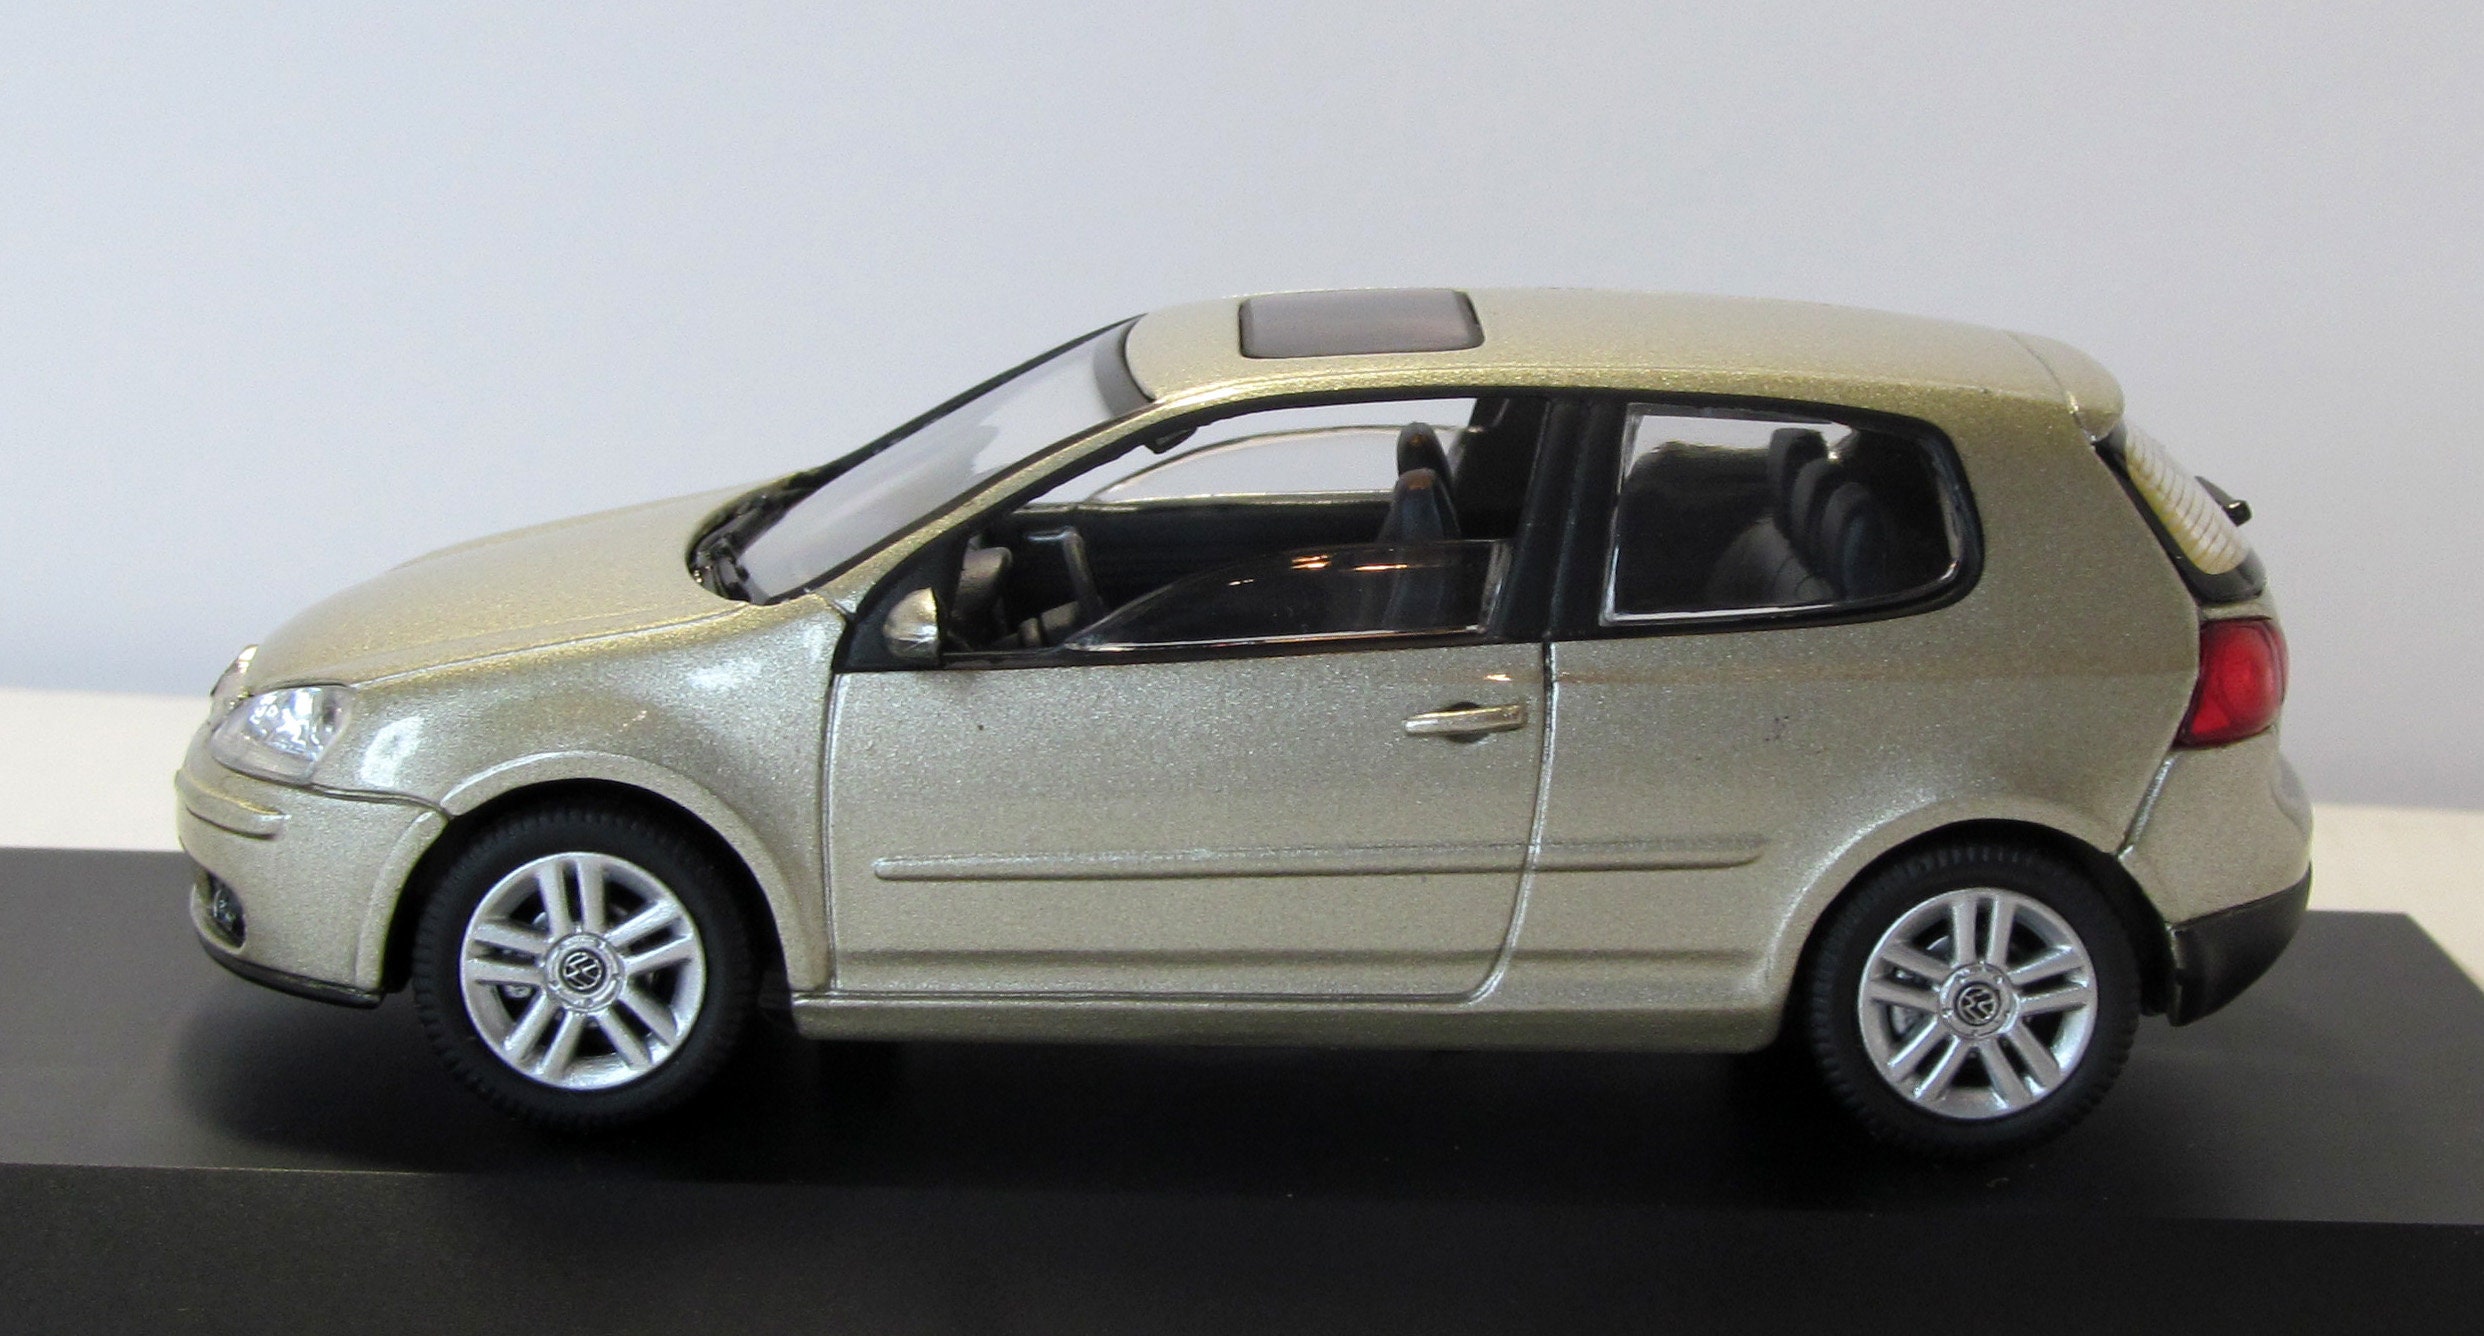 VW Volkswagen Golf V 3 Doors 2003-09, Schuco germany BOX. Piece Diecast  Collection. Metal Car Model 1/43. Diecast Scale 1:43. Hobby 